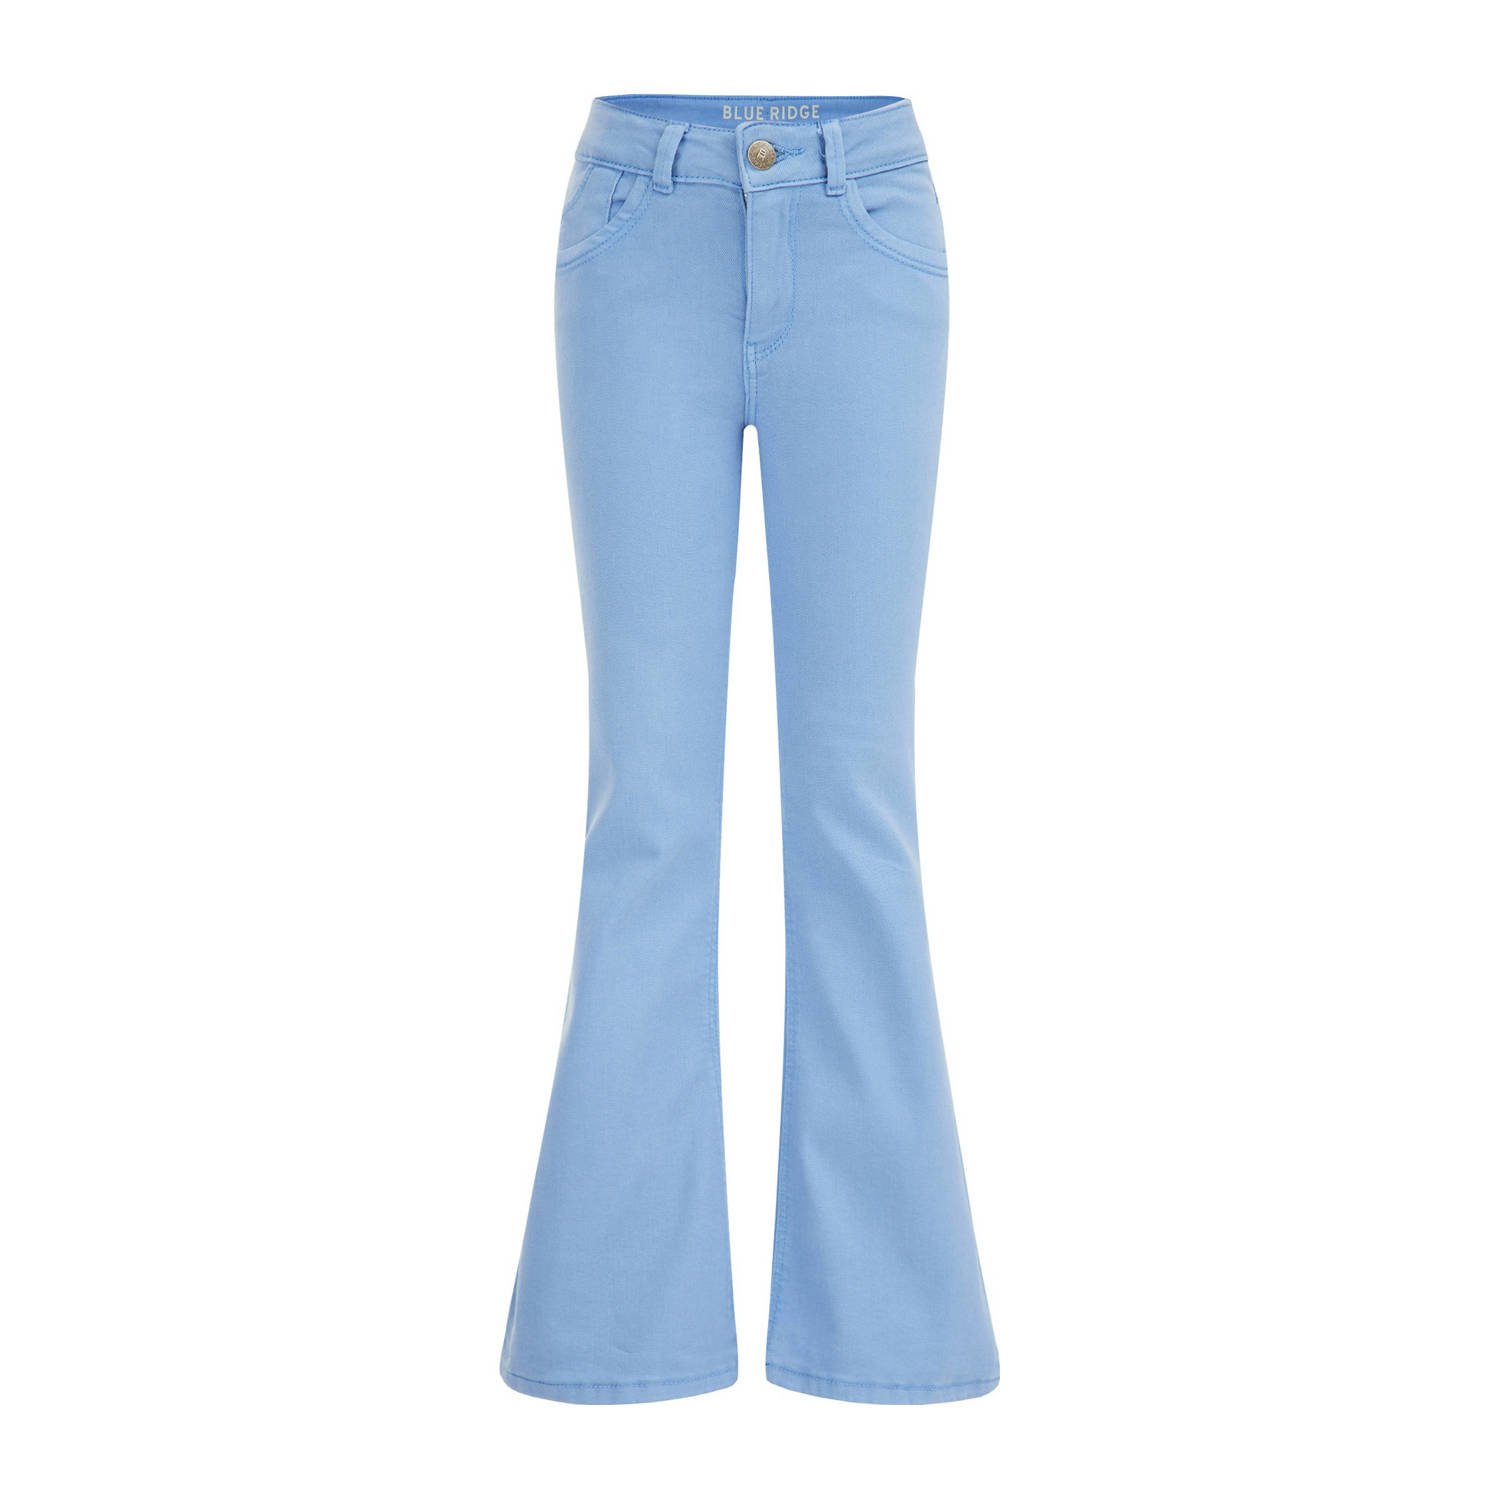 WE Fashion Blue Ridge flared jeans HW Farah nautical blue Blauw Meisjes Stretchdenim 152